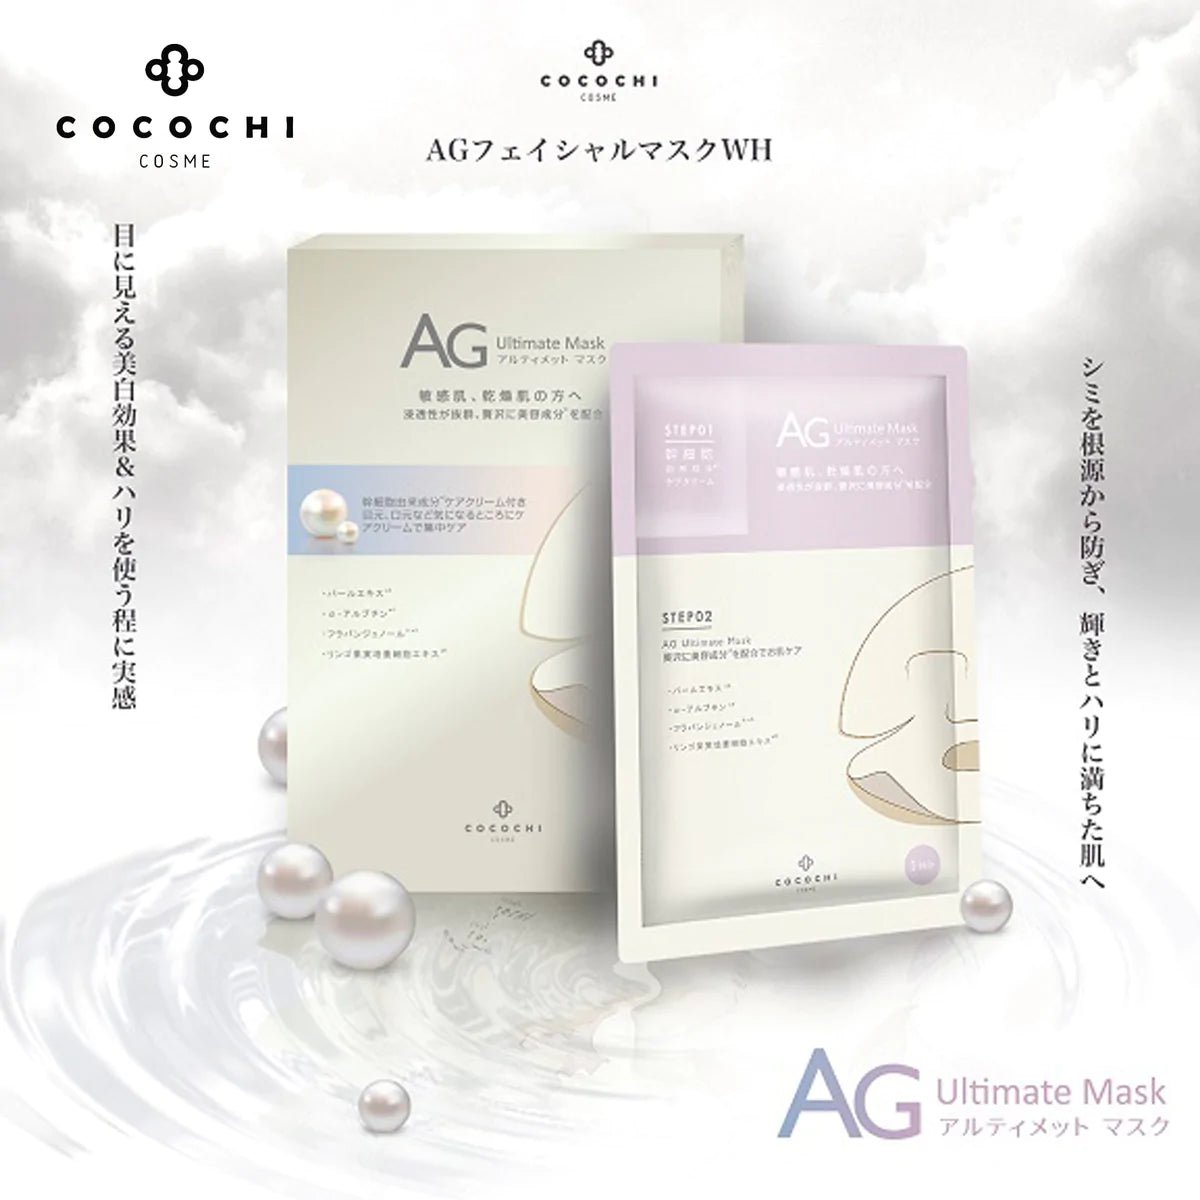 Cocochi Cosme Ag Pearl Essence Mask 5 Sheets - Cocochi Ag | Kiokii and...